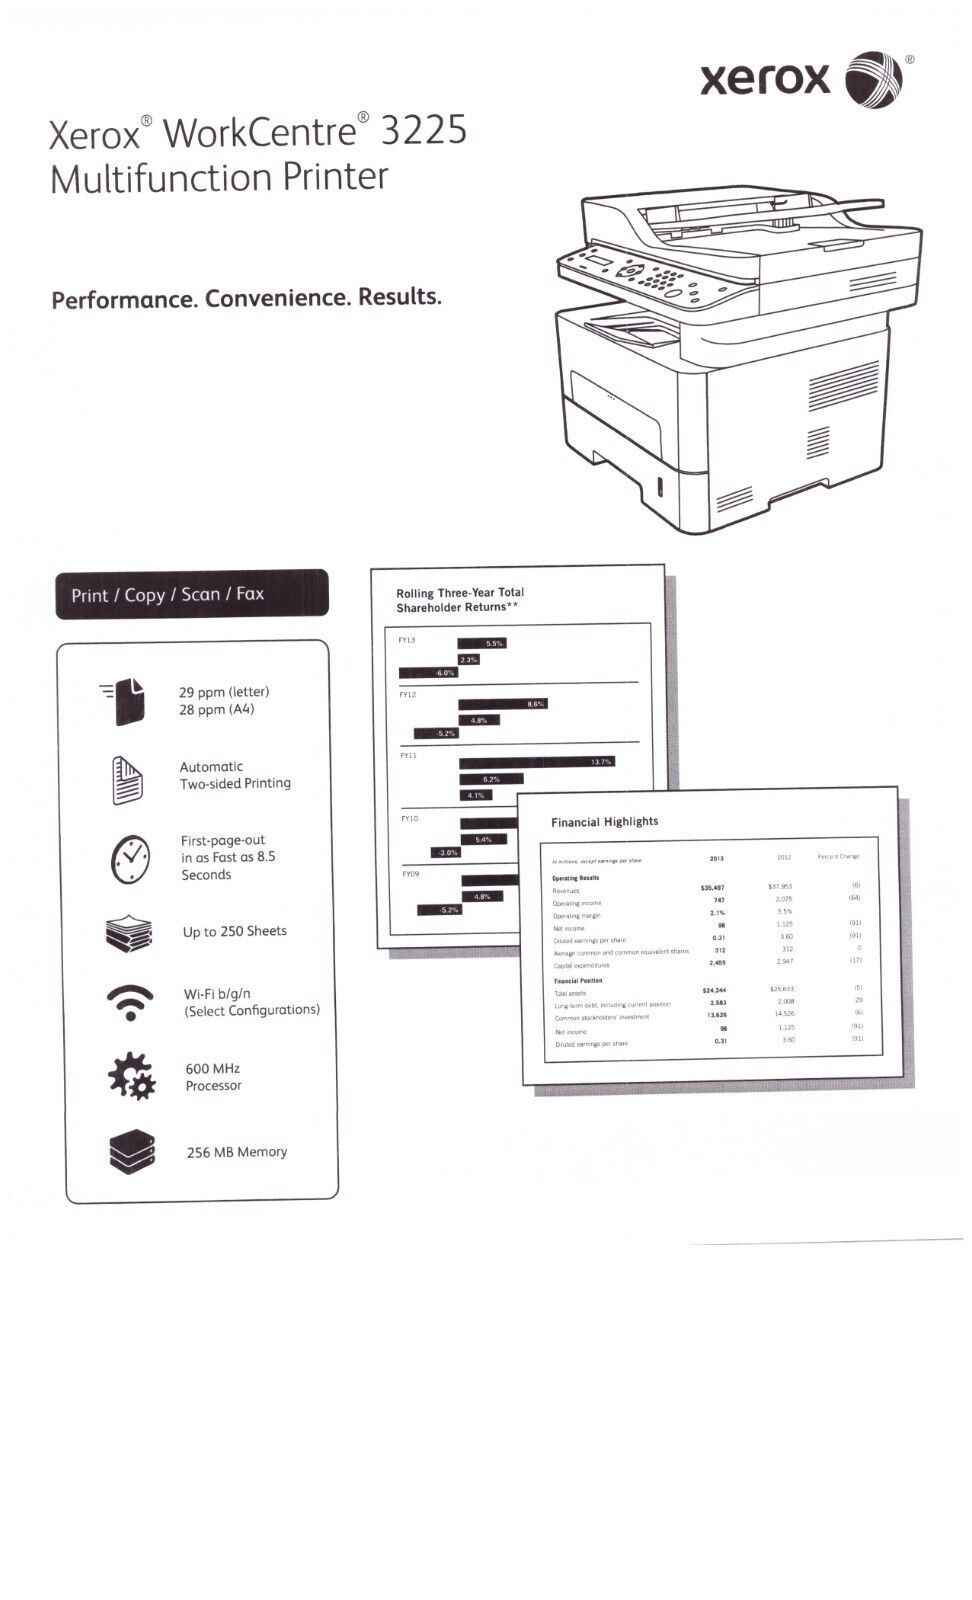 Xerox WorkCentre 3225 Monochrome MFC All in One Laser Printer - $199.95